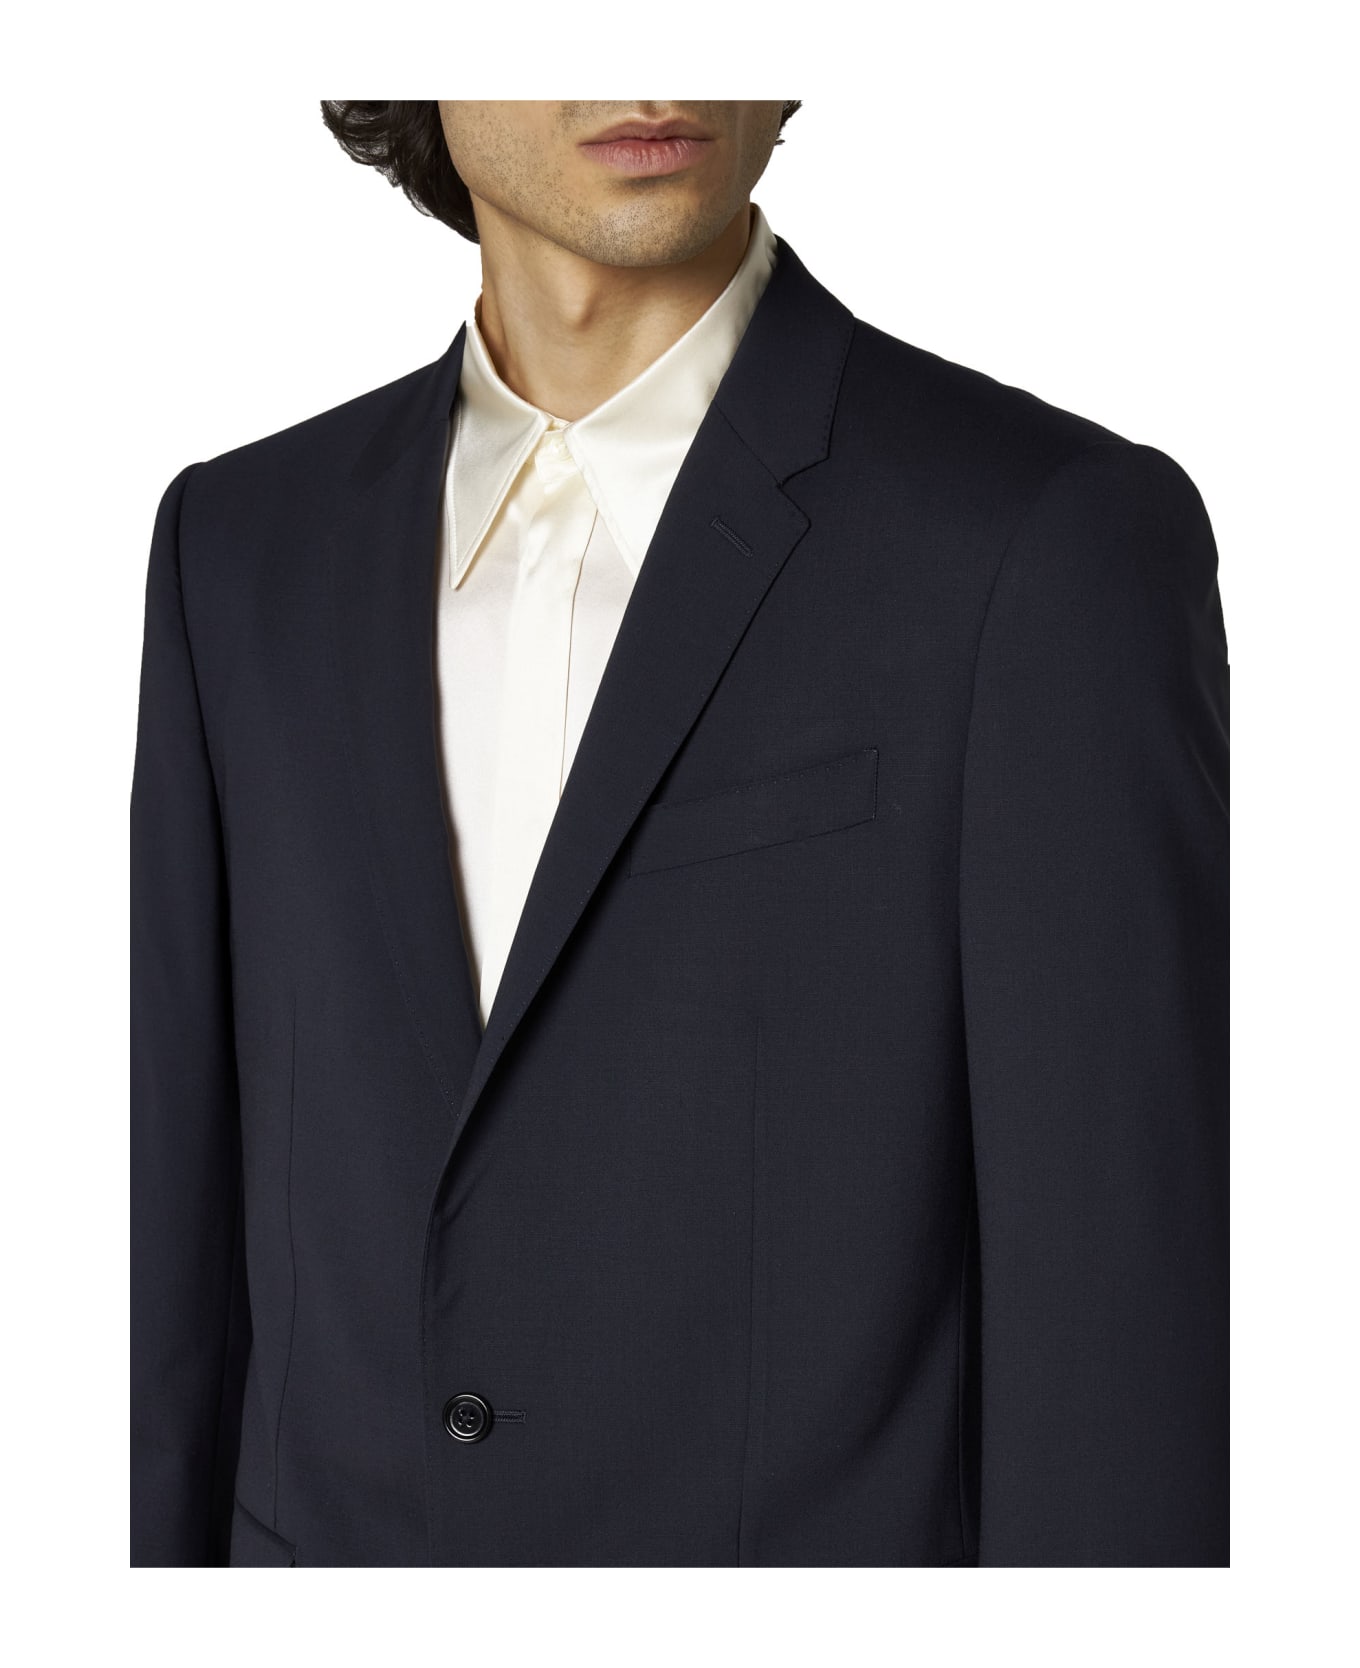 Dolce & Gabbana Suit - Blu scurisimo 1 スーツ